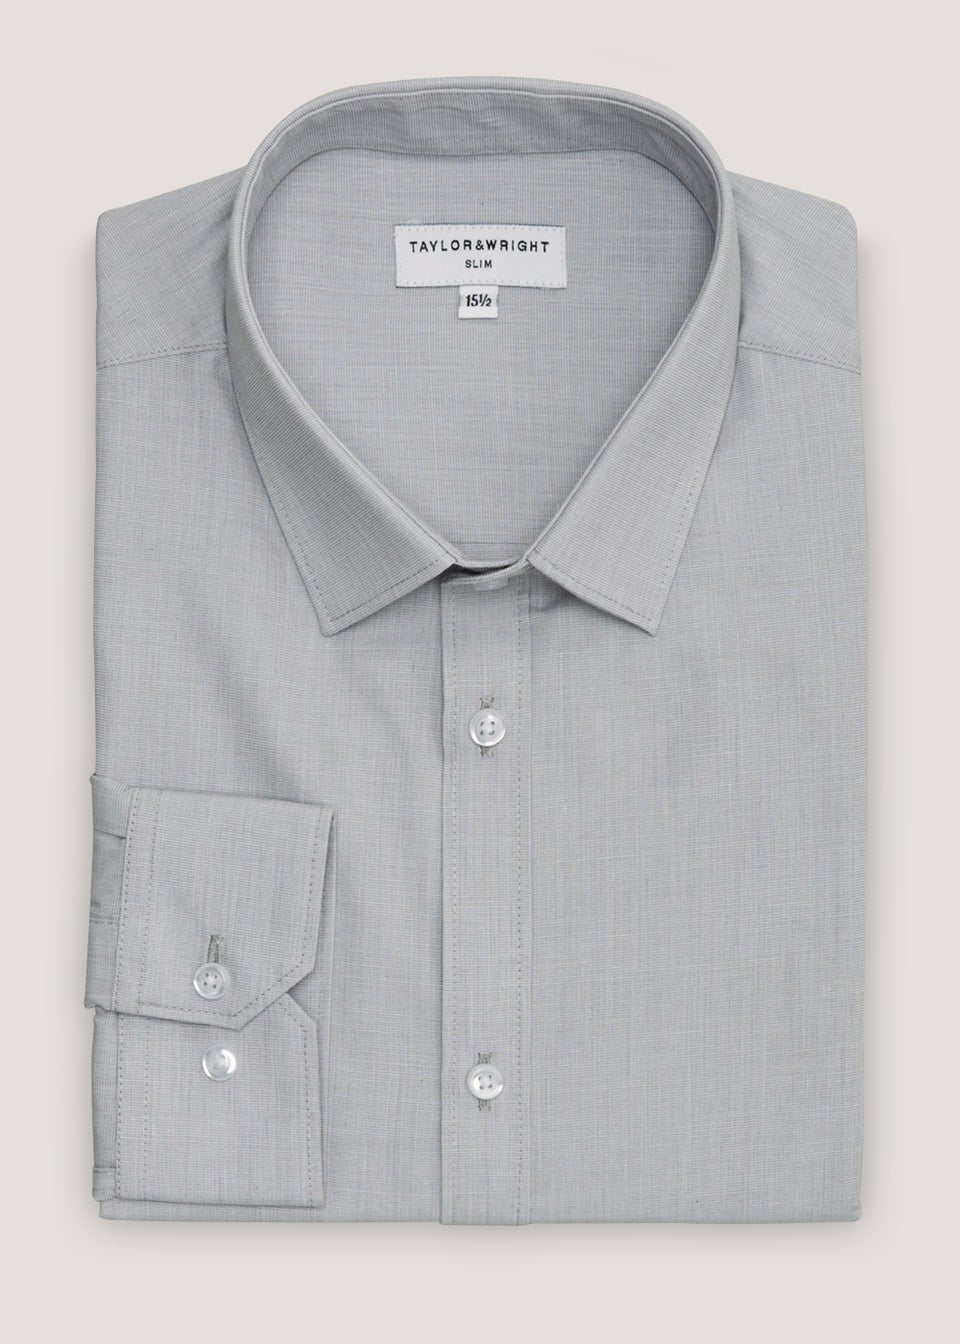 Taylor & Wright Grey Easy Care Slim Fit Shirt - Matalan